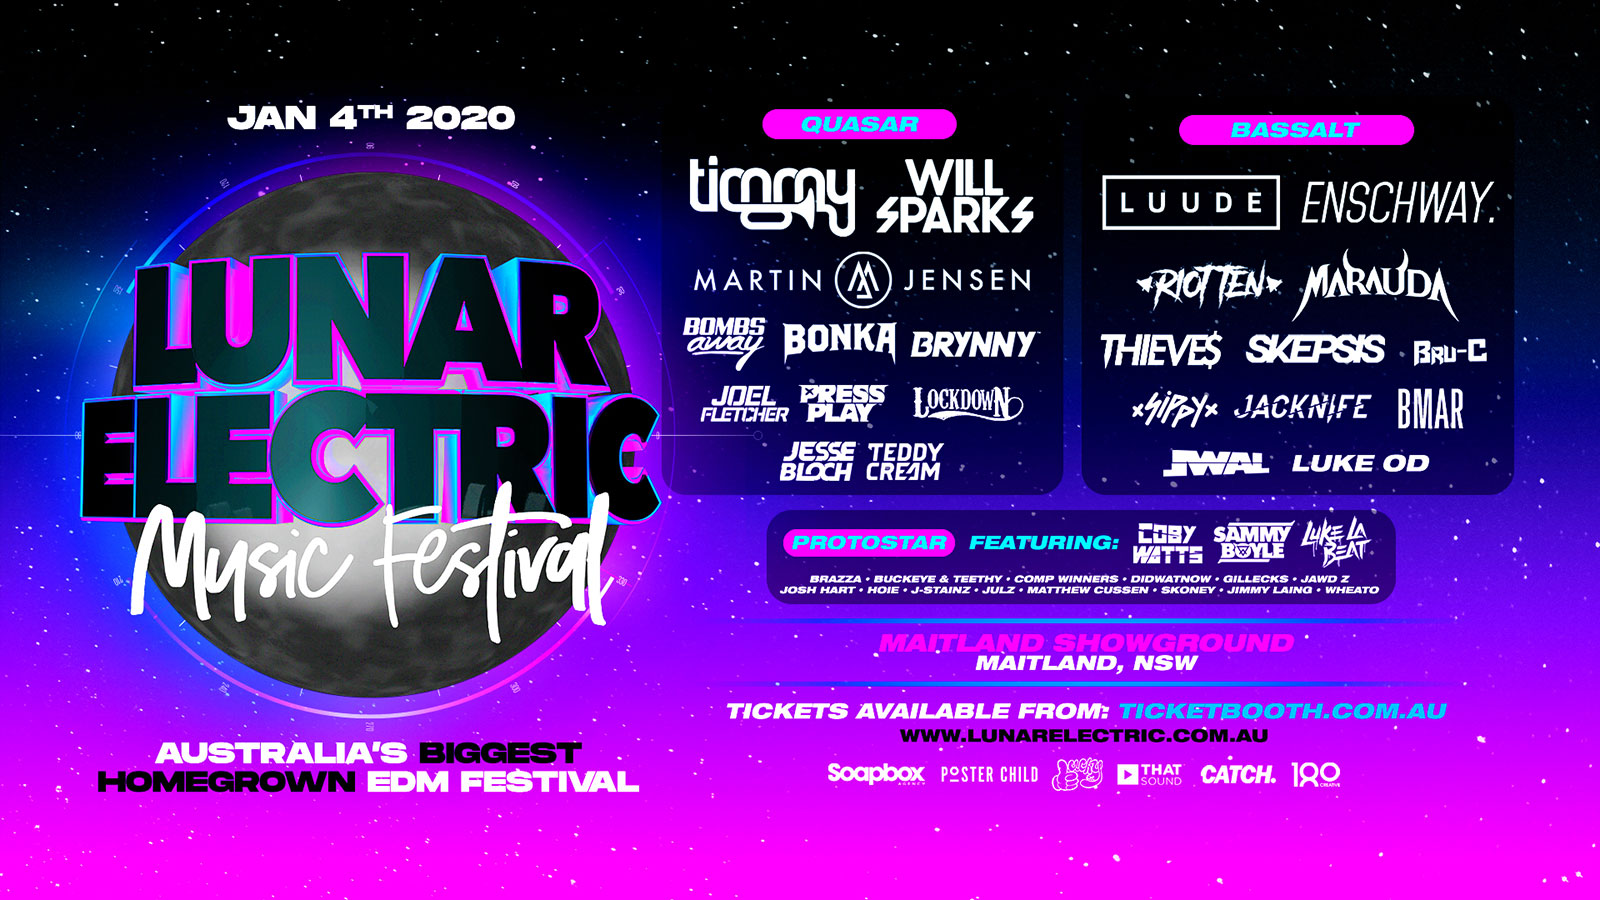 lunar-electric-music-festival-maitland-nsw-oz-edm